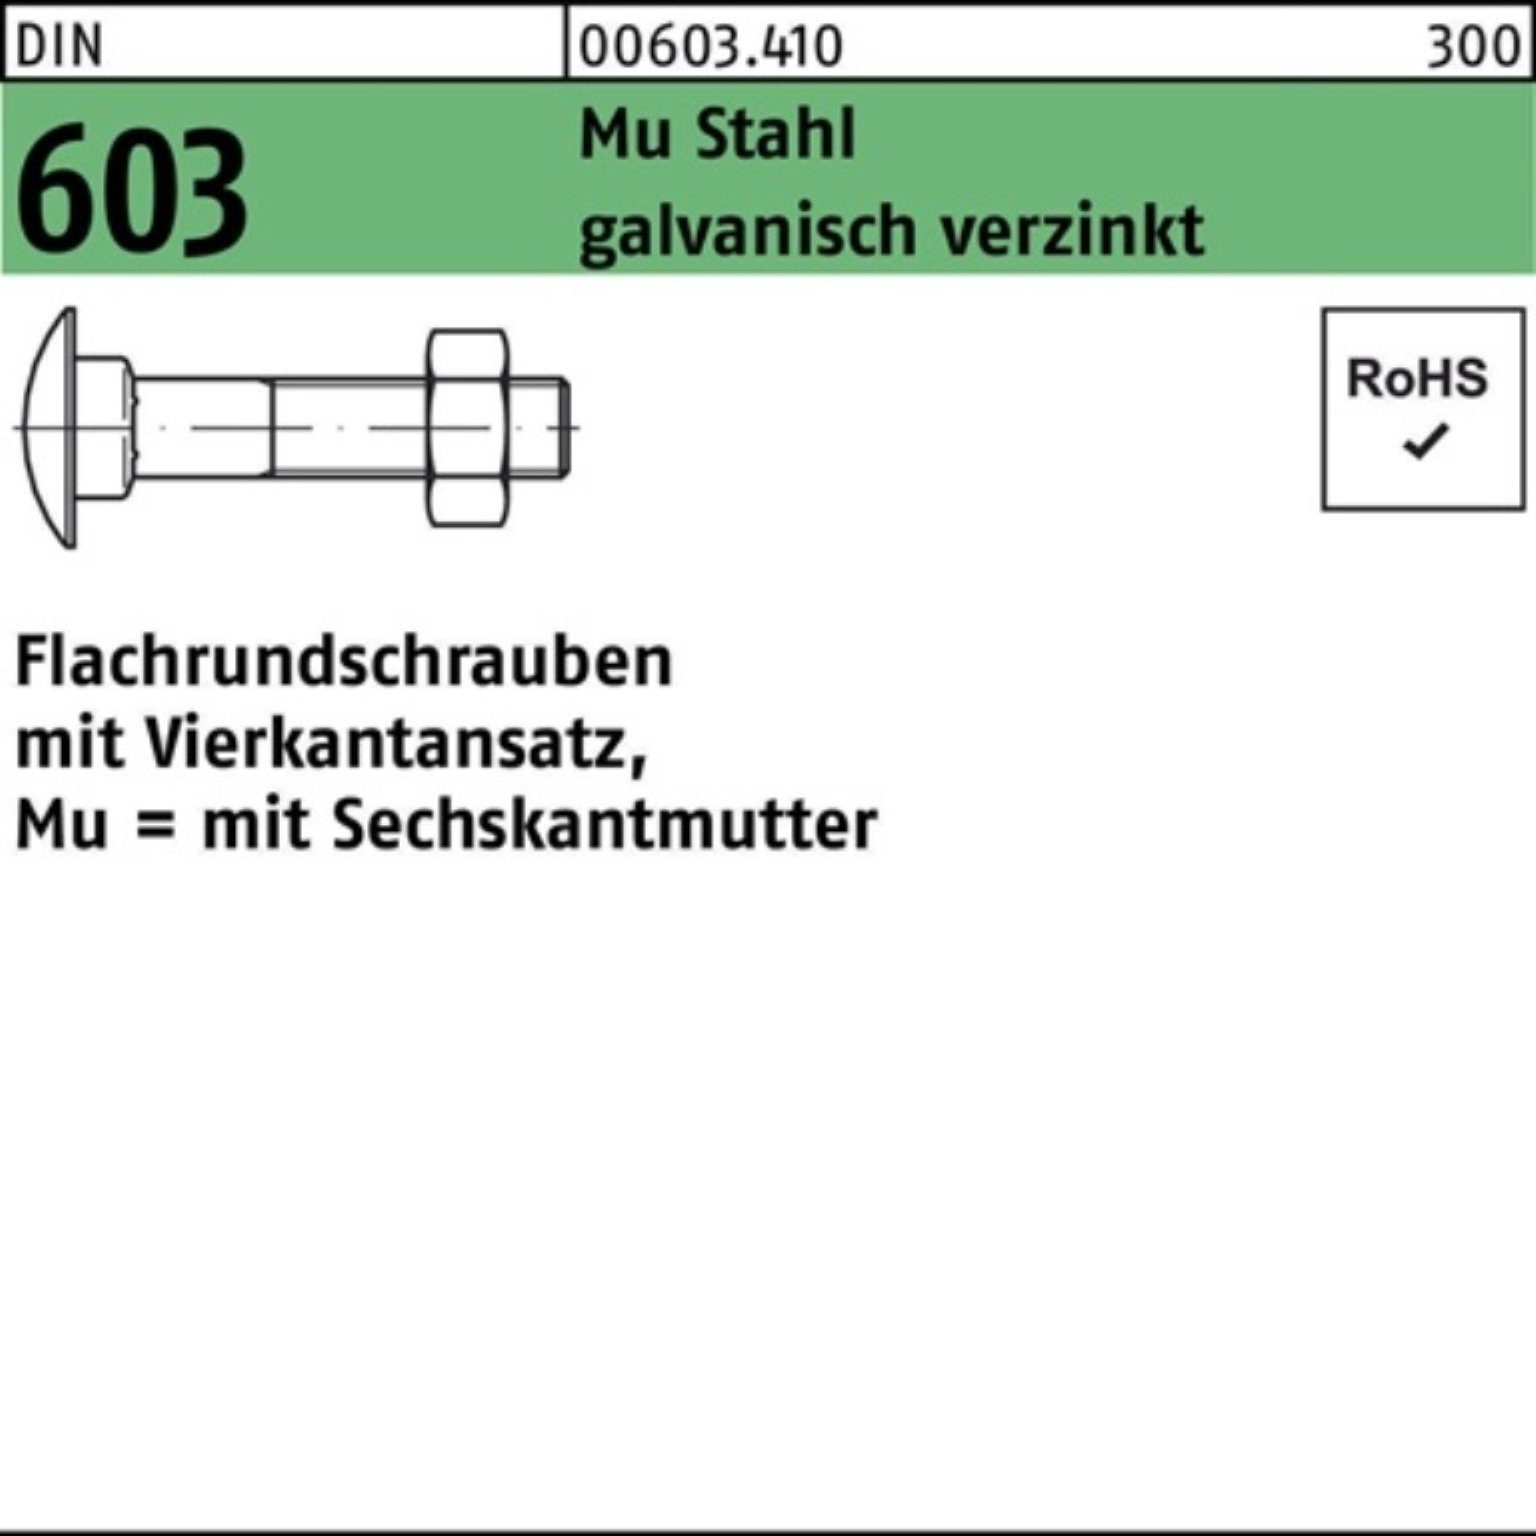 Reyher Flachrundschraube 100er Schraube Pack M8x120 Vierkantansatz/6-ktmutter 603 DIN